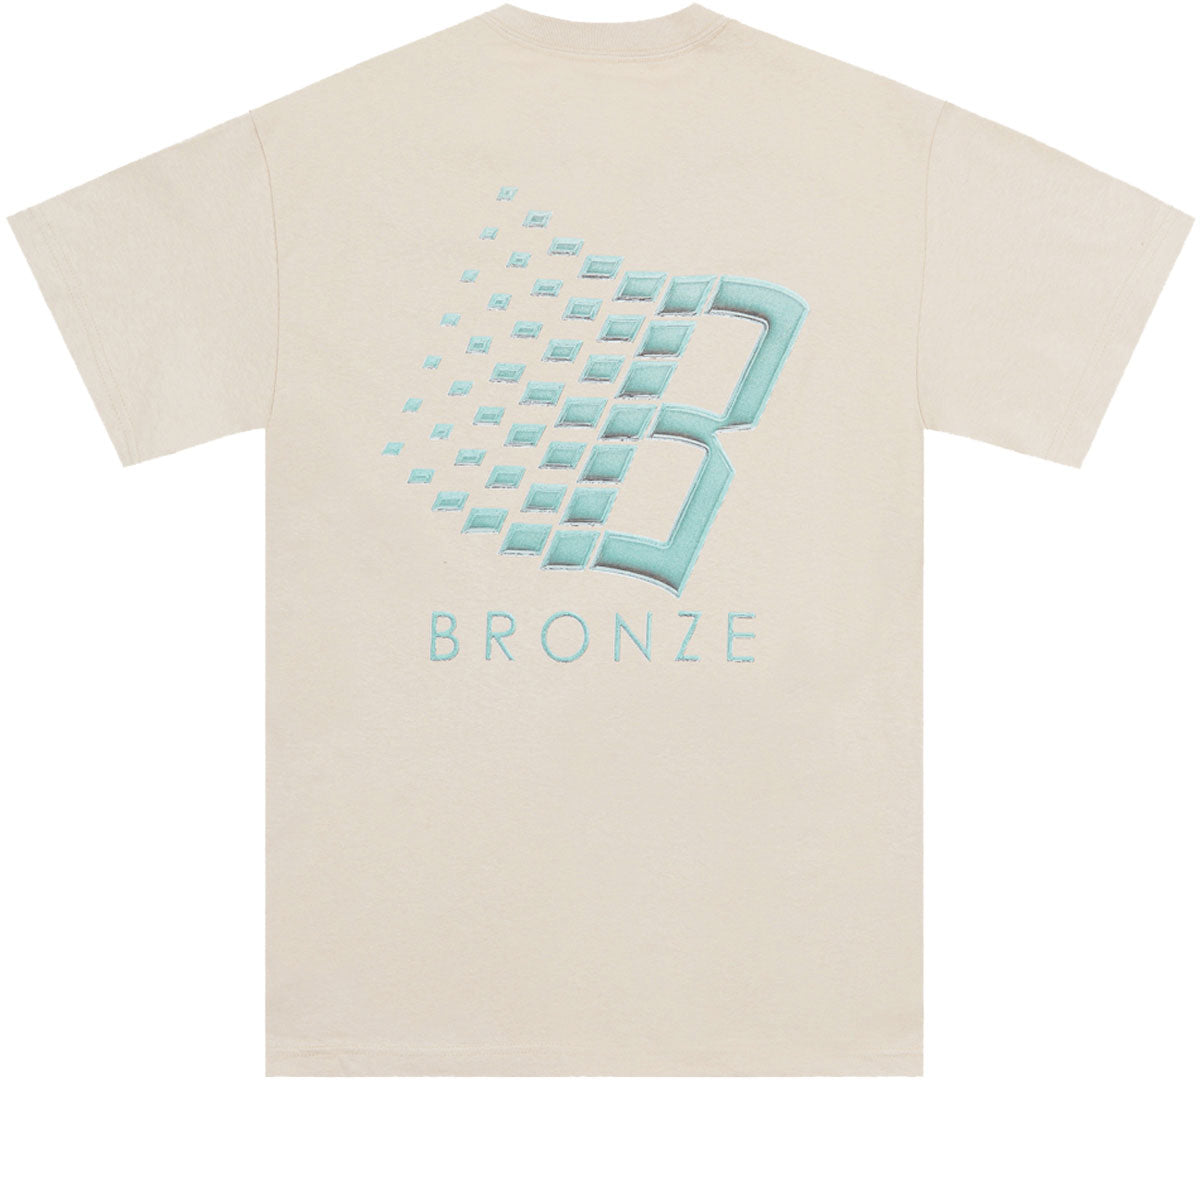 Bronze 56k Balloon Logo T-Shirt - Sand image 1